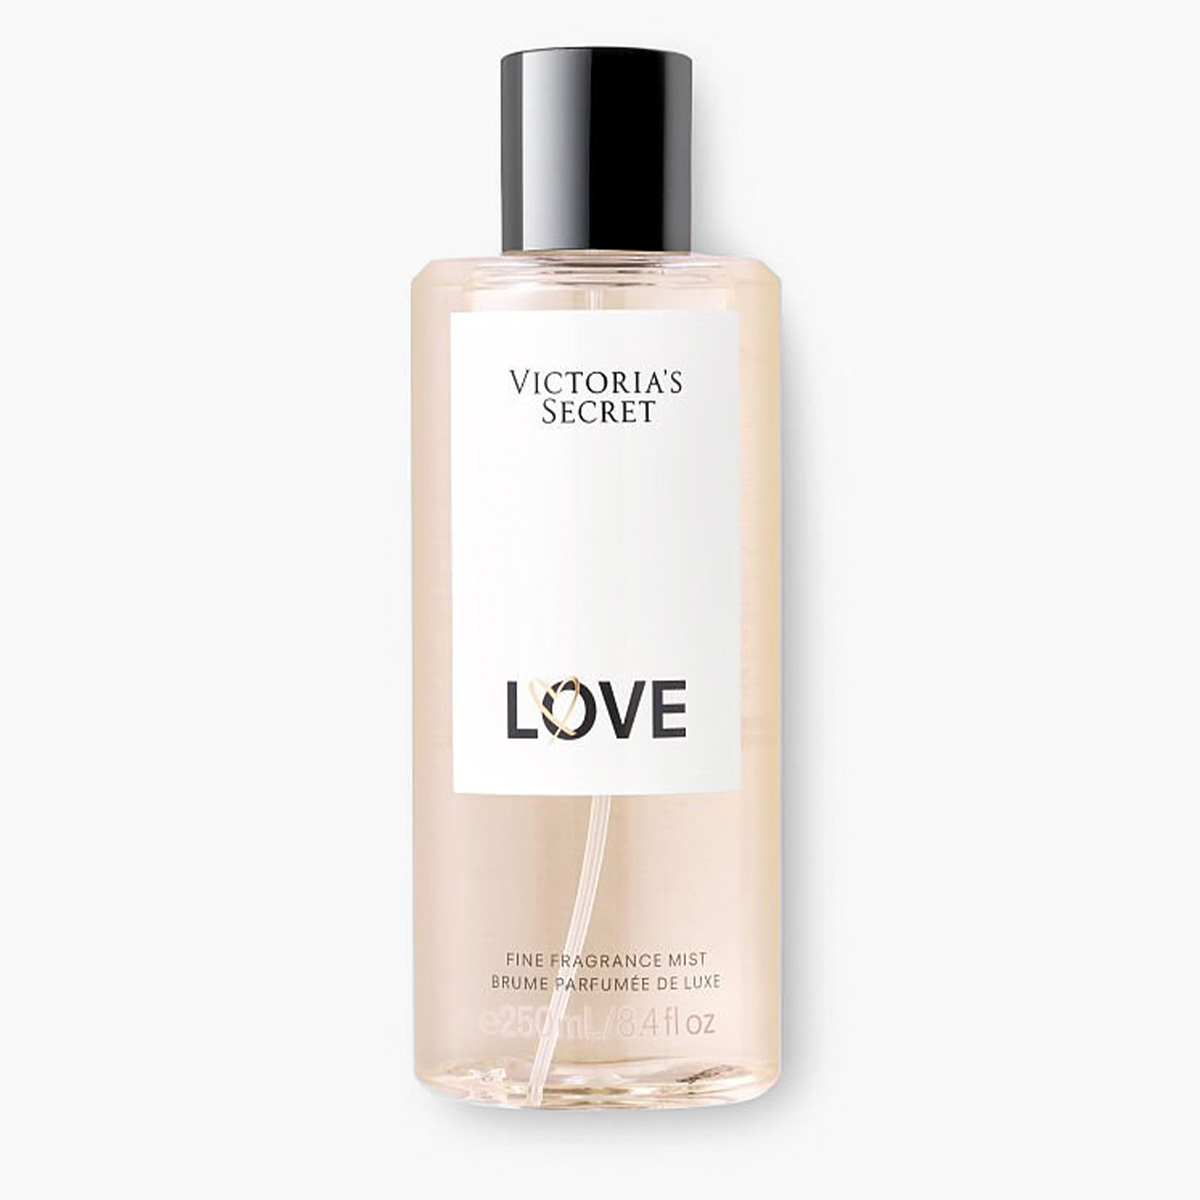 A product shot of Victoria's Secret Love Fragrance Mist